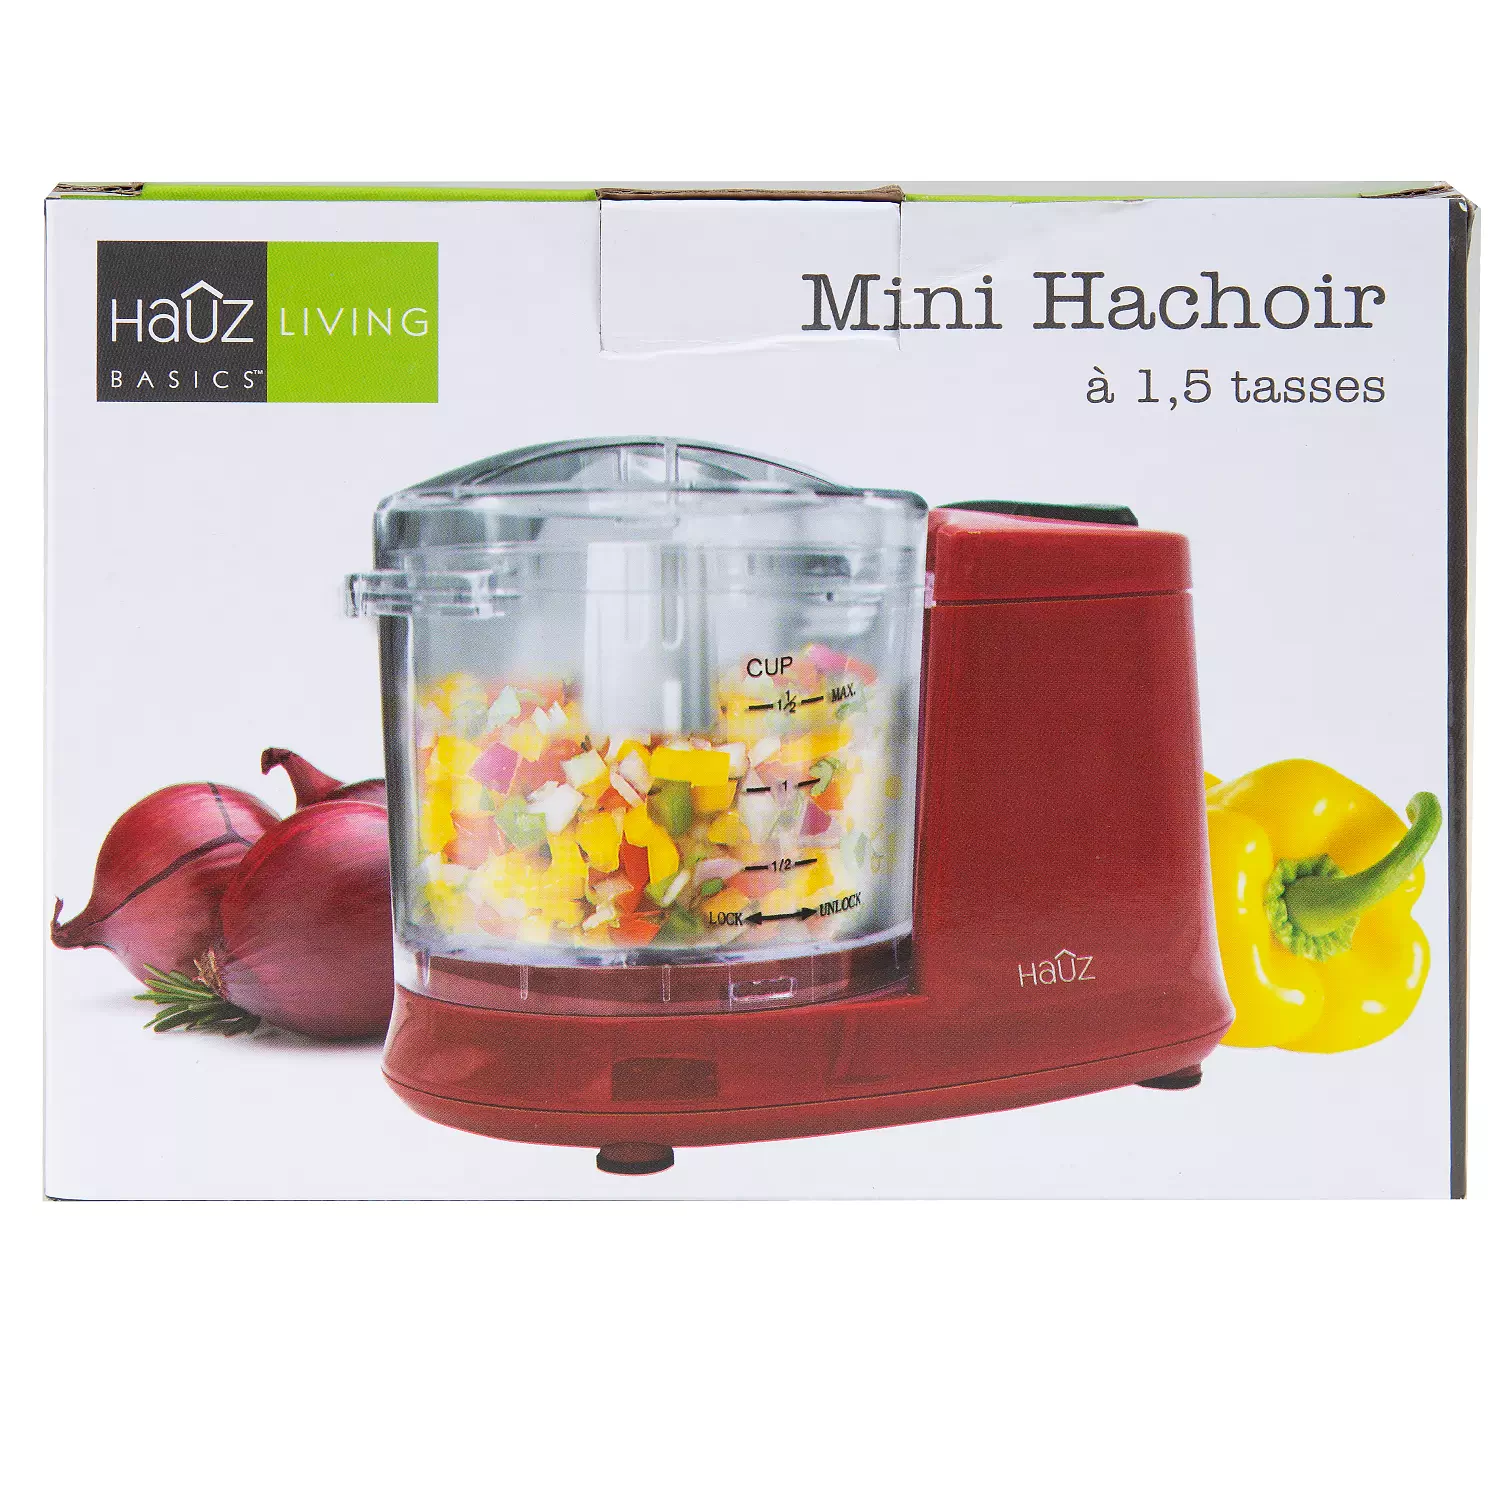 Hauz Basics - Mini hachoir à 1,5 tasses. Colour: red, Fr